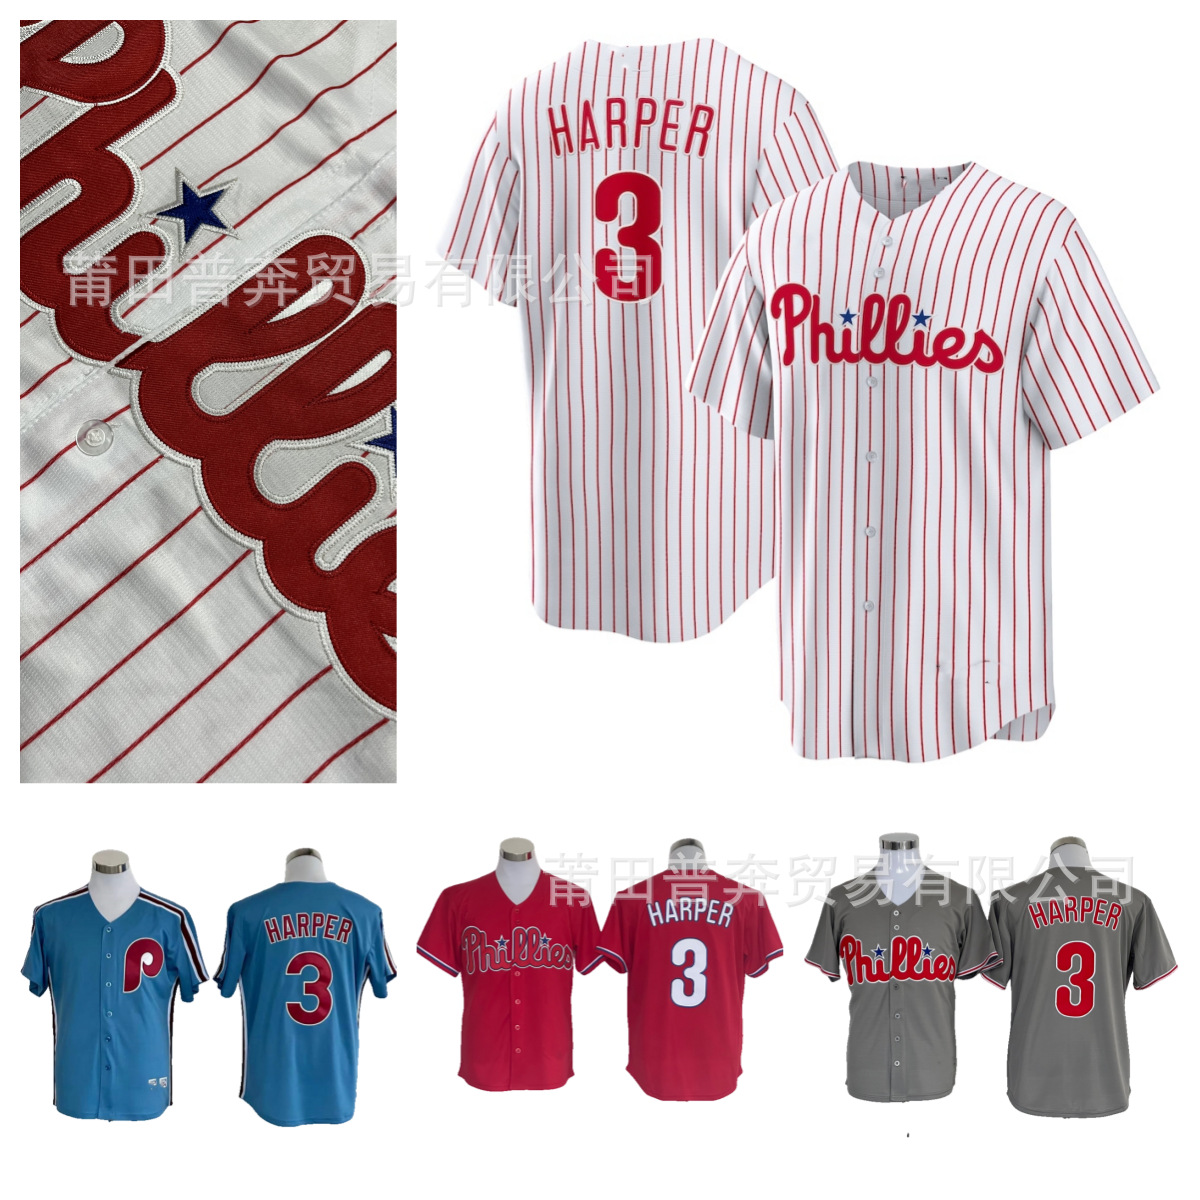 MLB棒球球衣Phillies费城人队3#HARPER 主场球衣刺绣大量现货批发